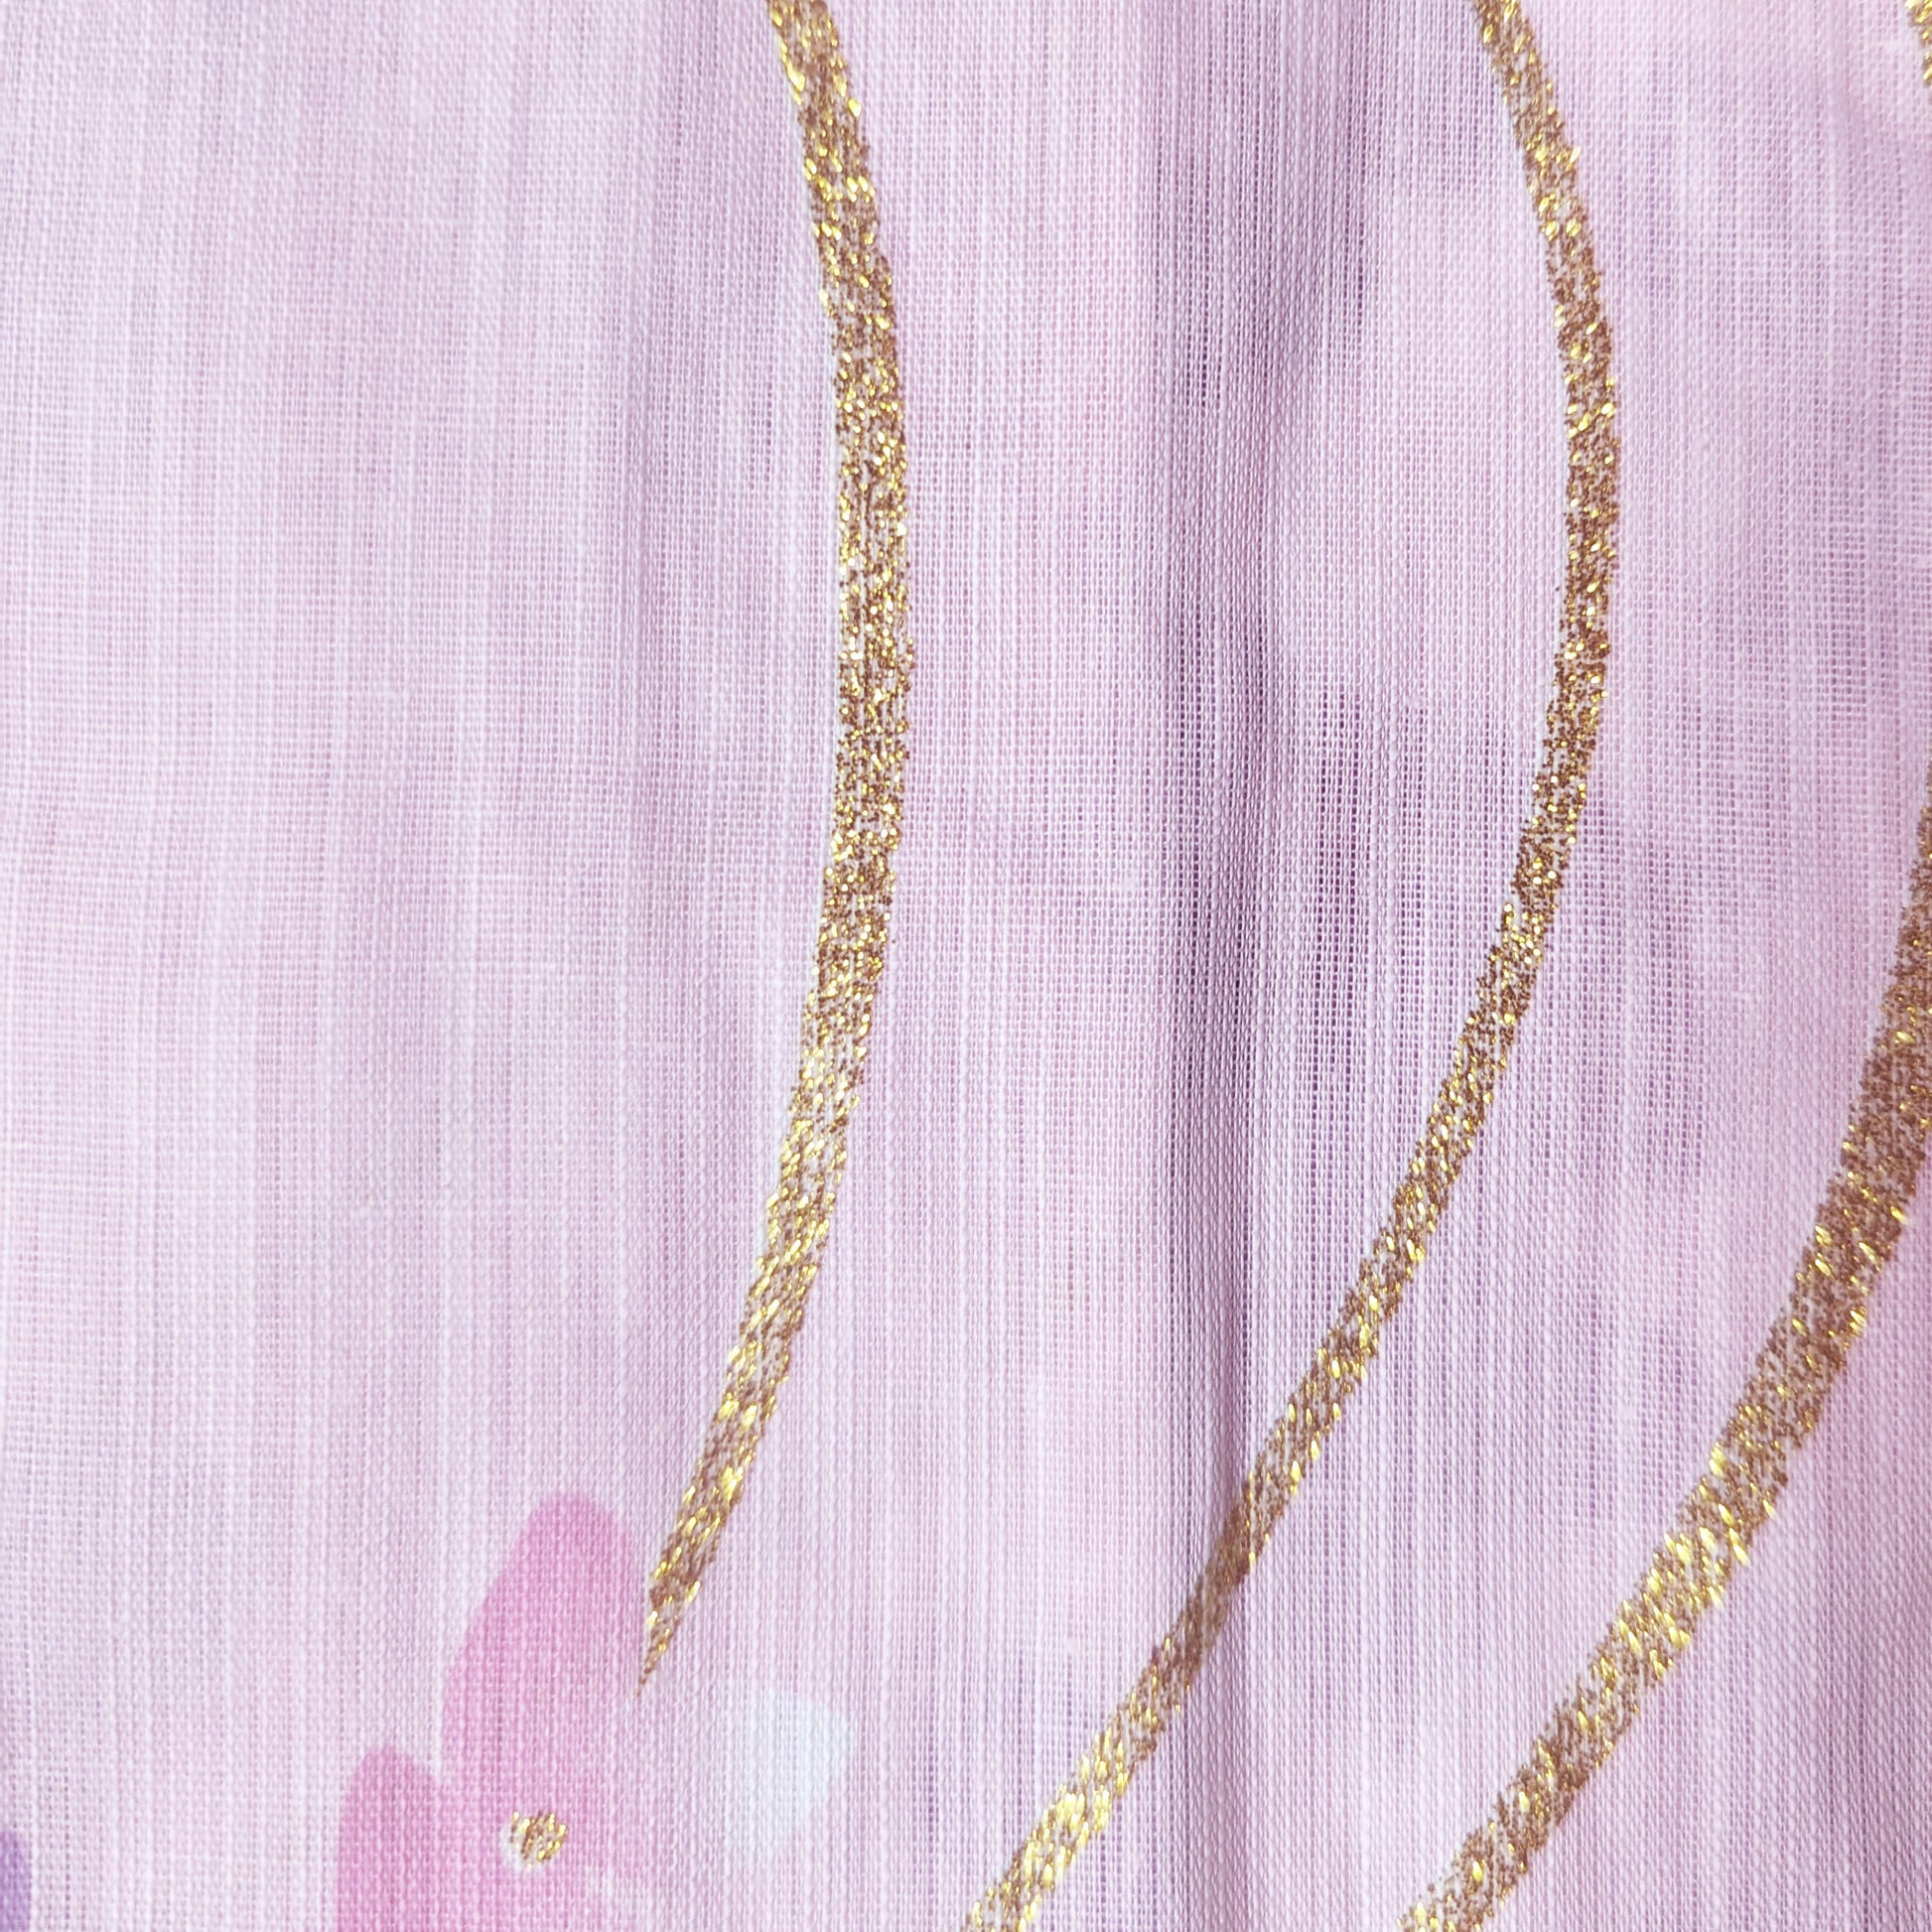 Japanese Yukata Kimono - Pink and Purple Lilac in Pink